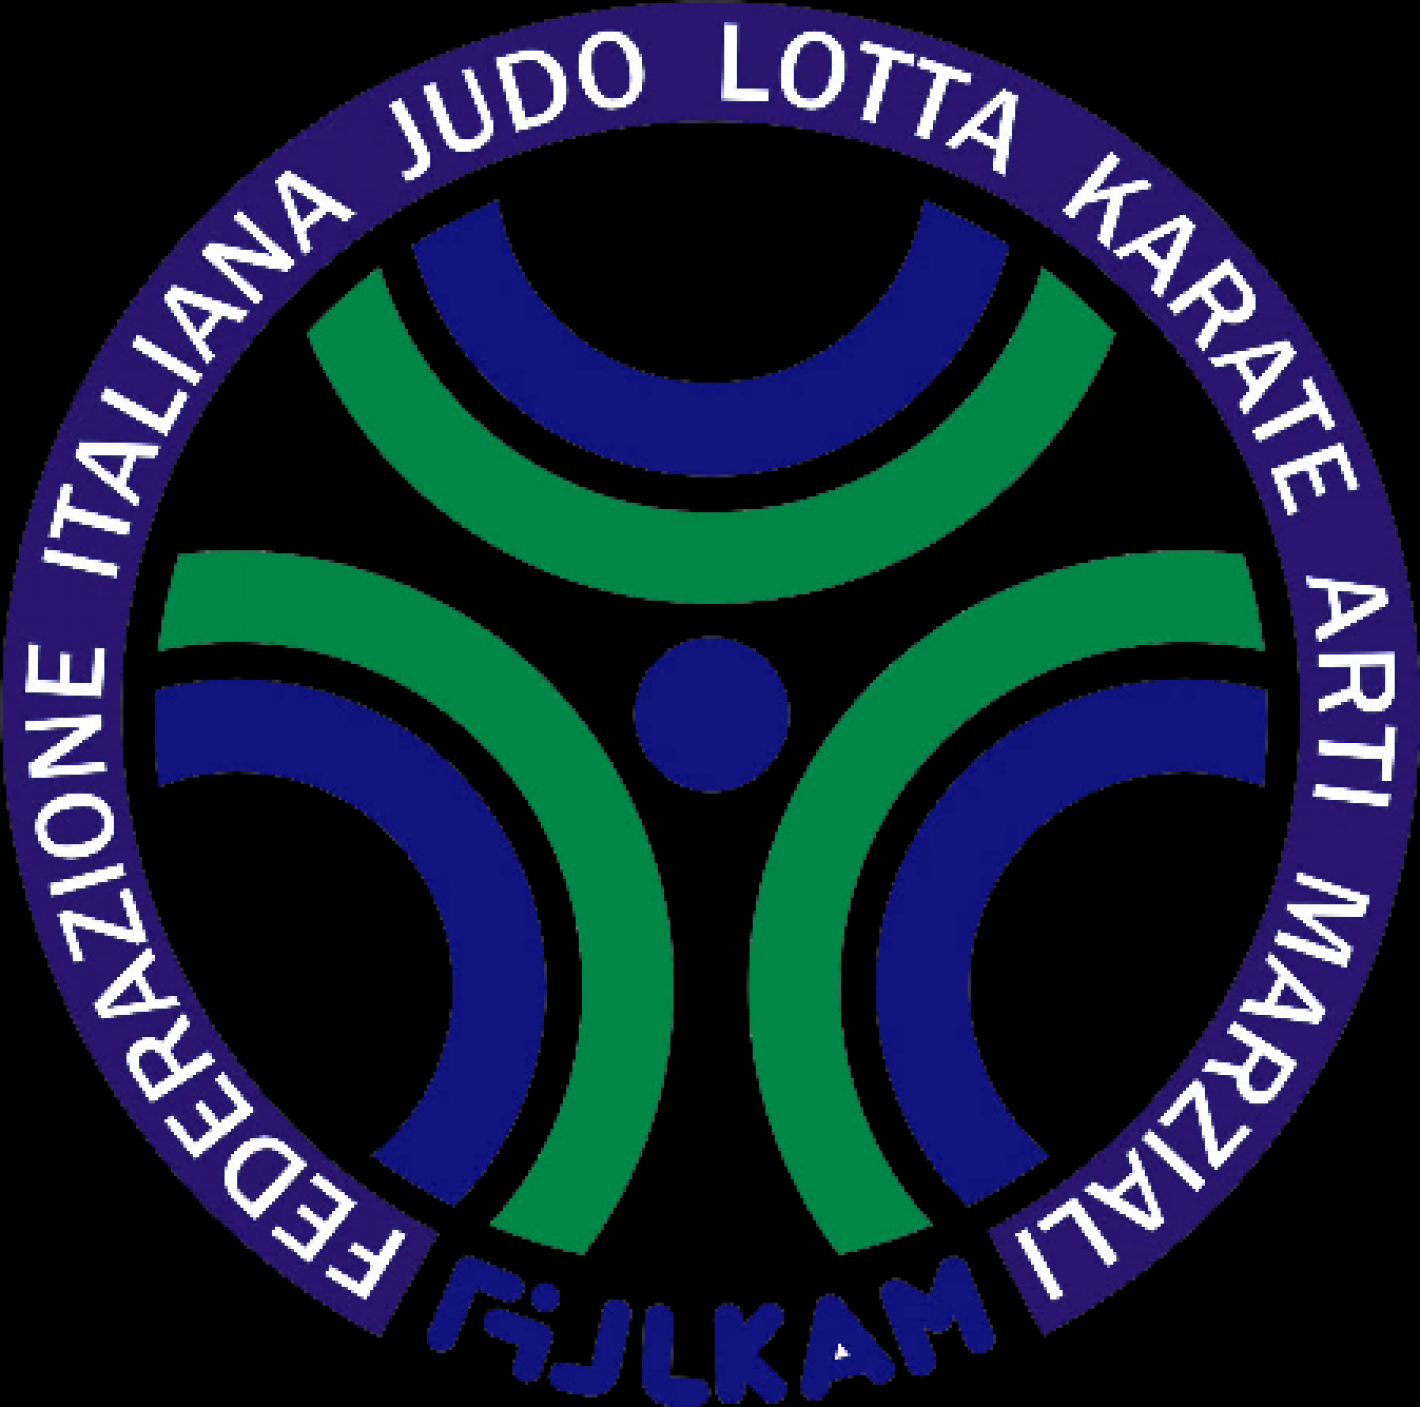 images/veneto/Judo/2018/medium/Logo-FIJLKAM-TRASP.-Perfetto-web.png